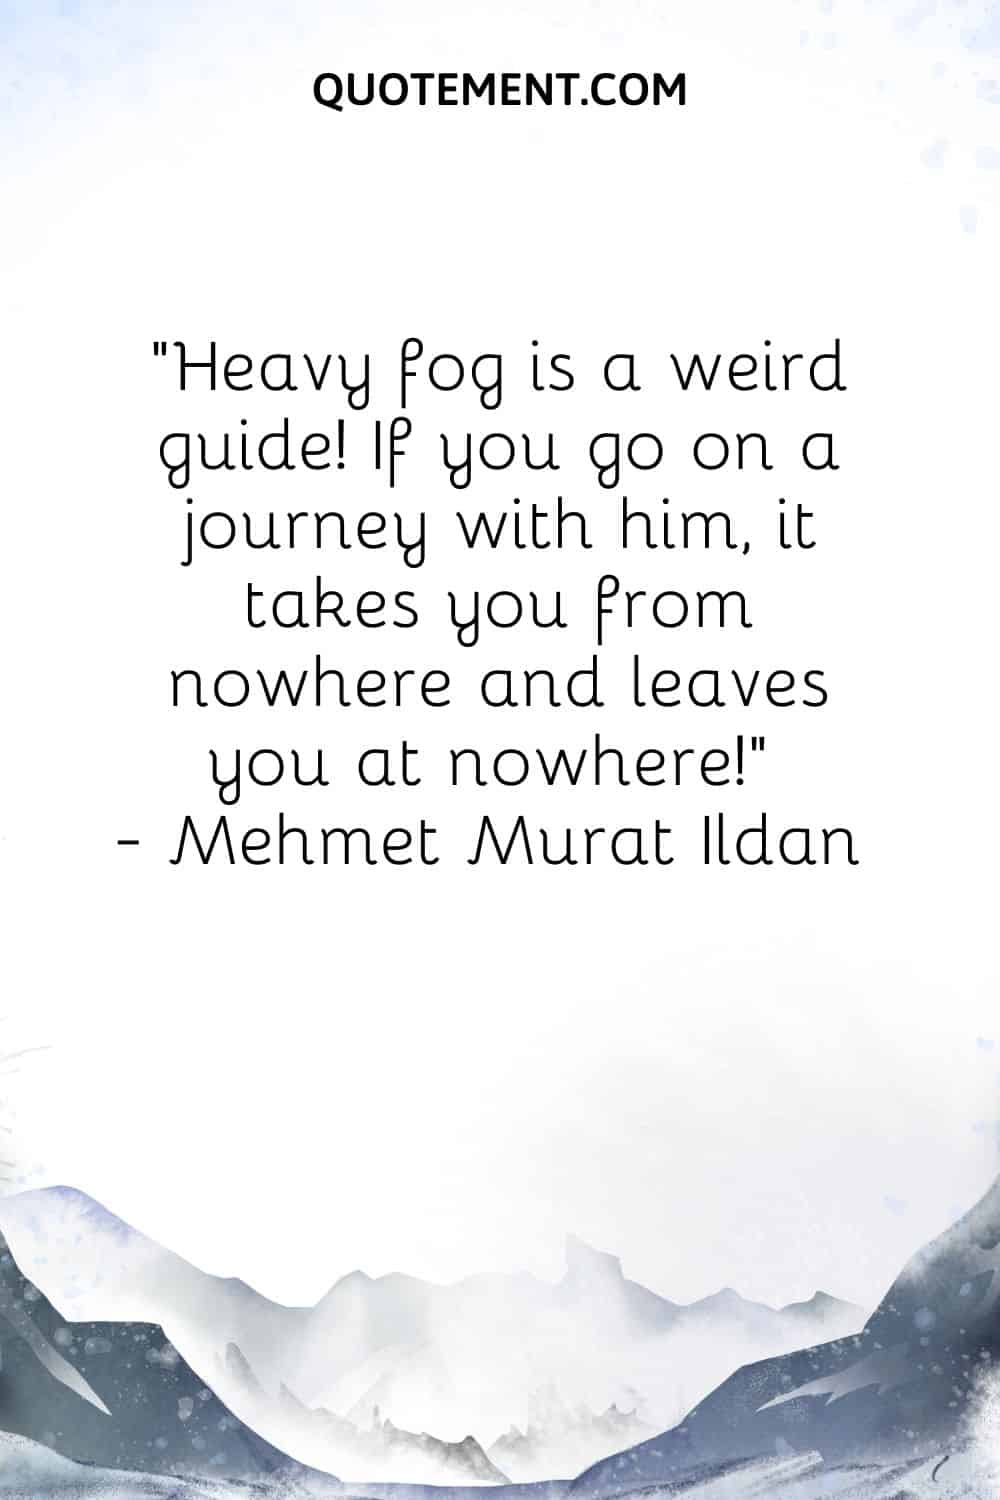 Heavy fog is a weird guide